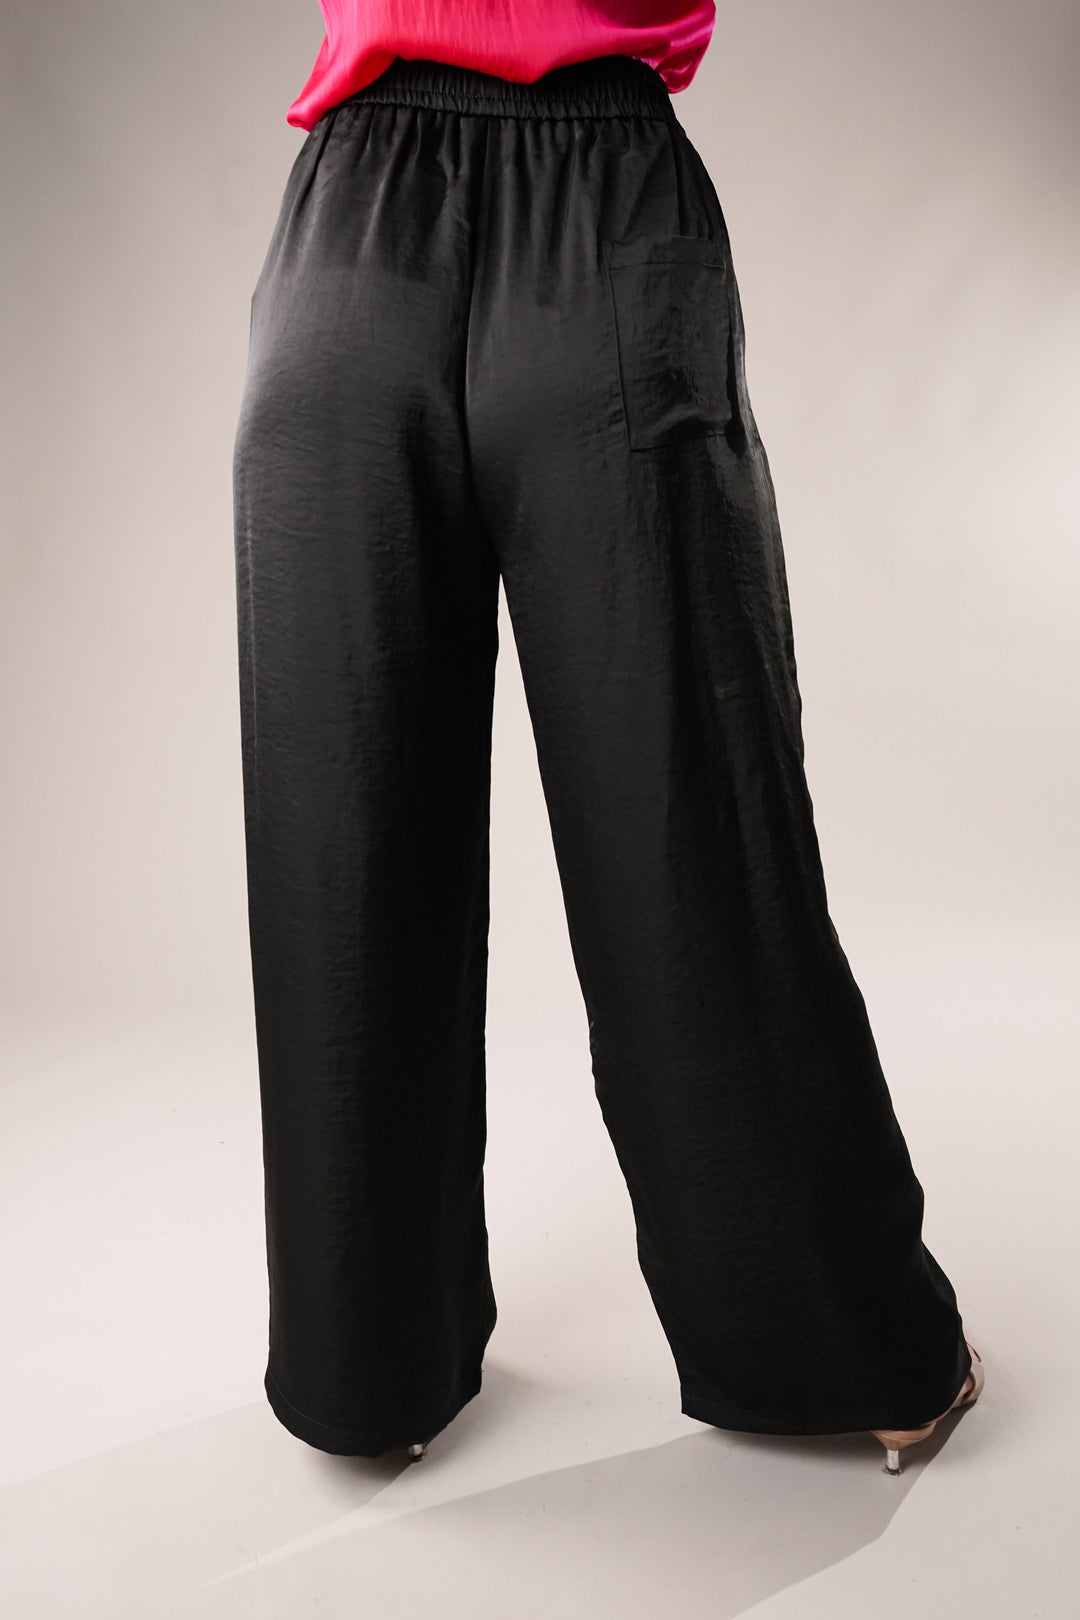 Stylish black satin pants for office wear